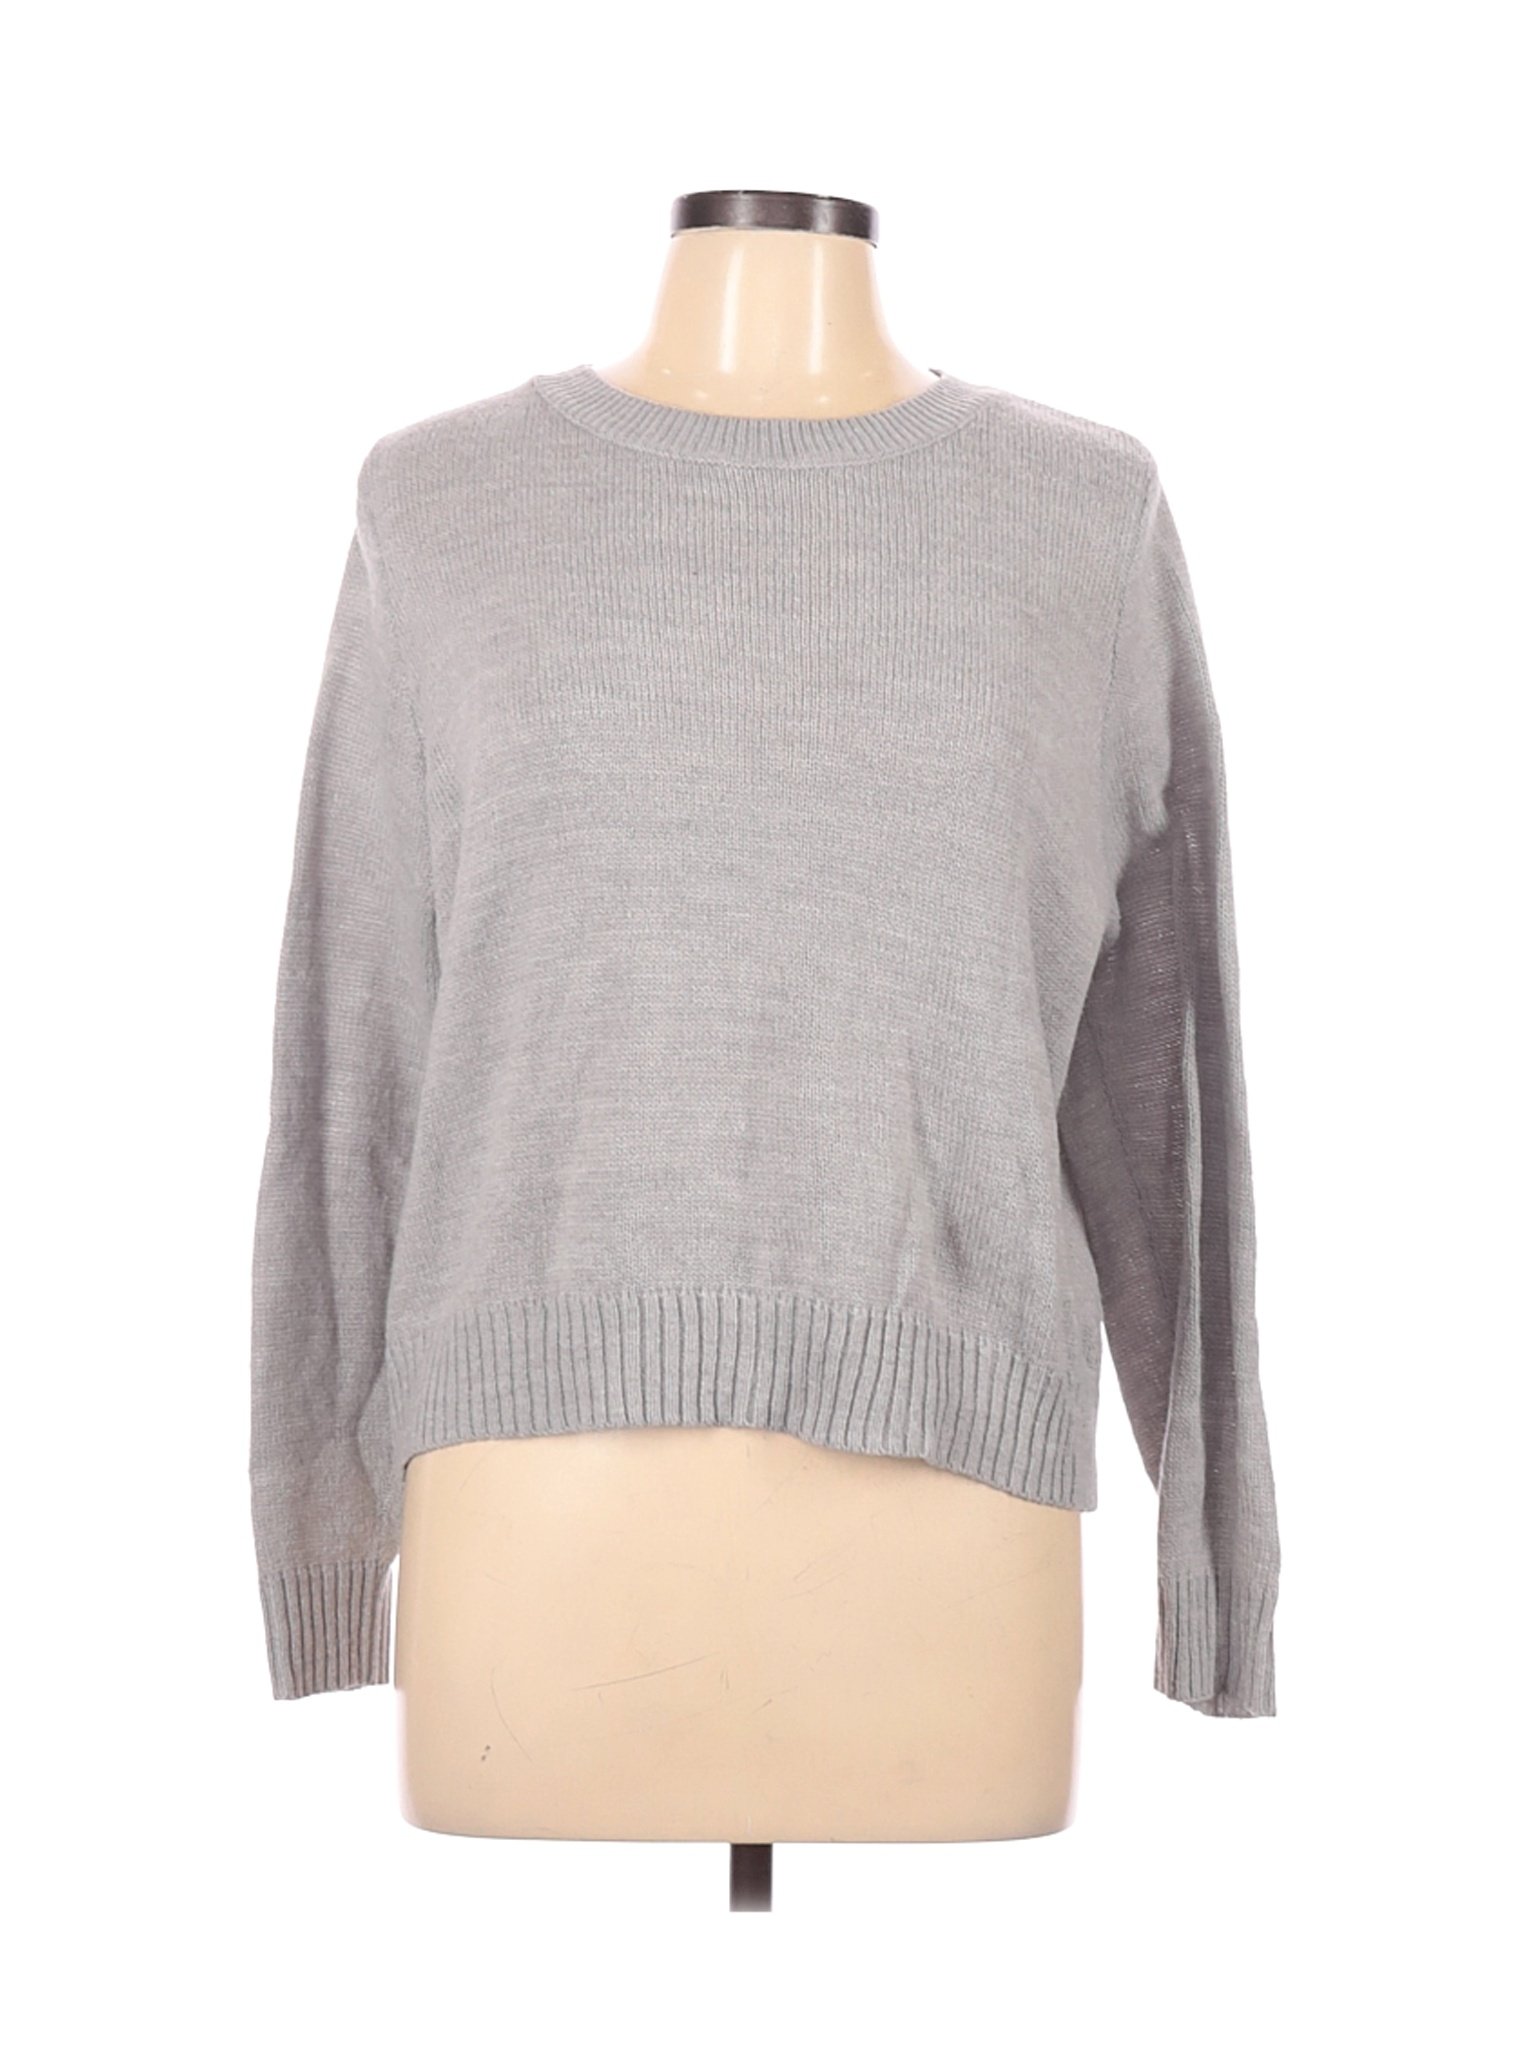 H&M Women Gray Pullover Sweater L | eBay